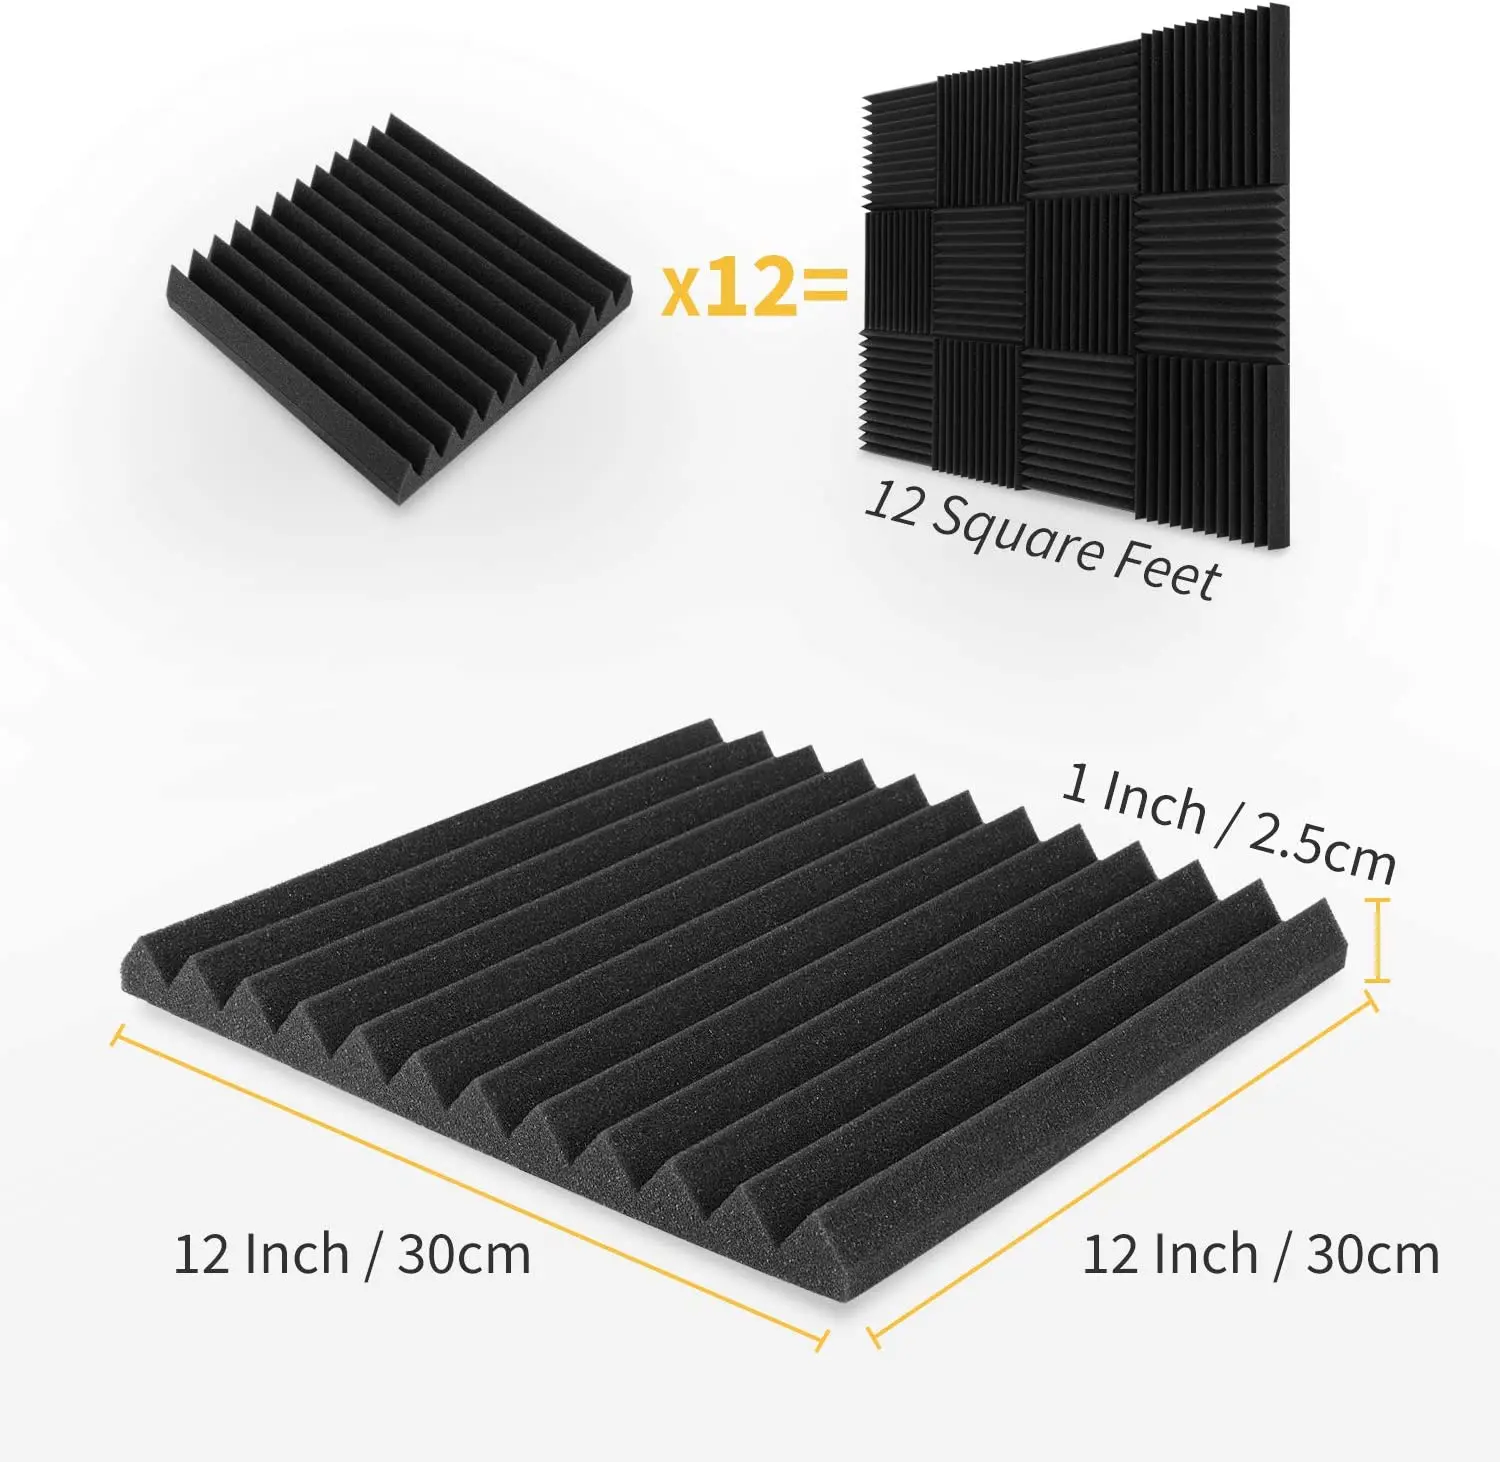 48PCS 300x300x25mm Acoustic Foam Sound Insulation Panels for KTV Bar Soundproofing Studio Wedges Sound Proof Wall Panels Espuma